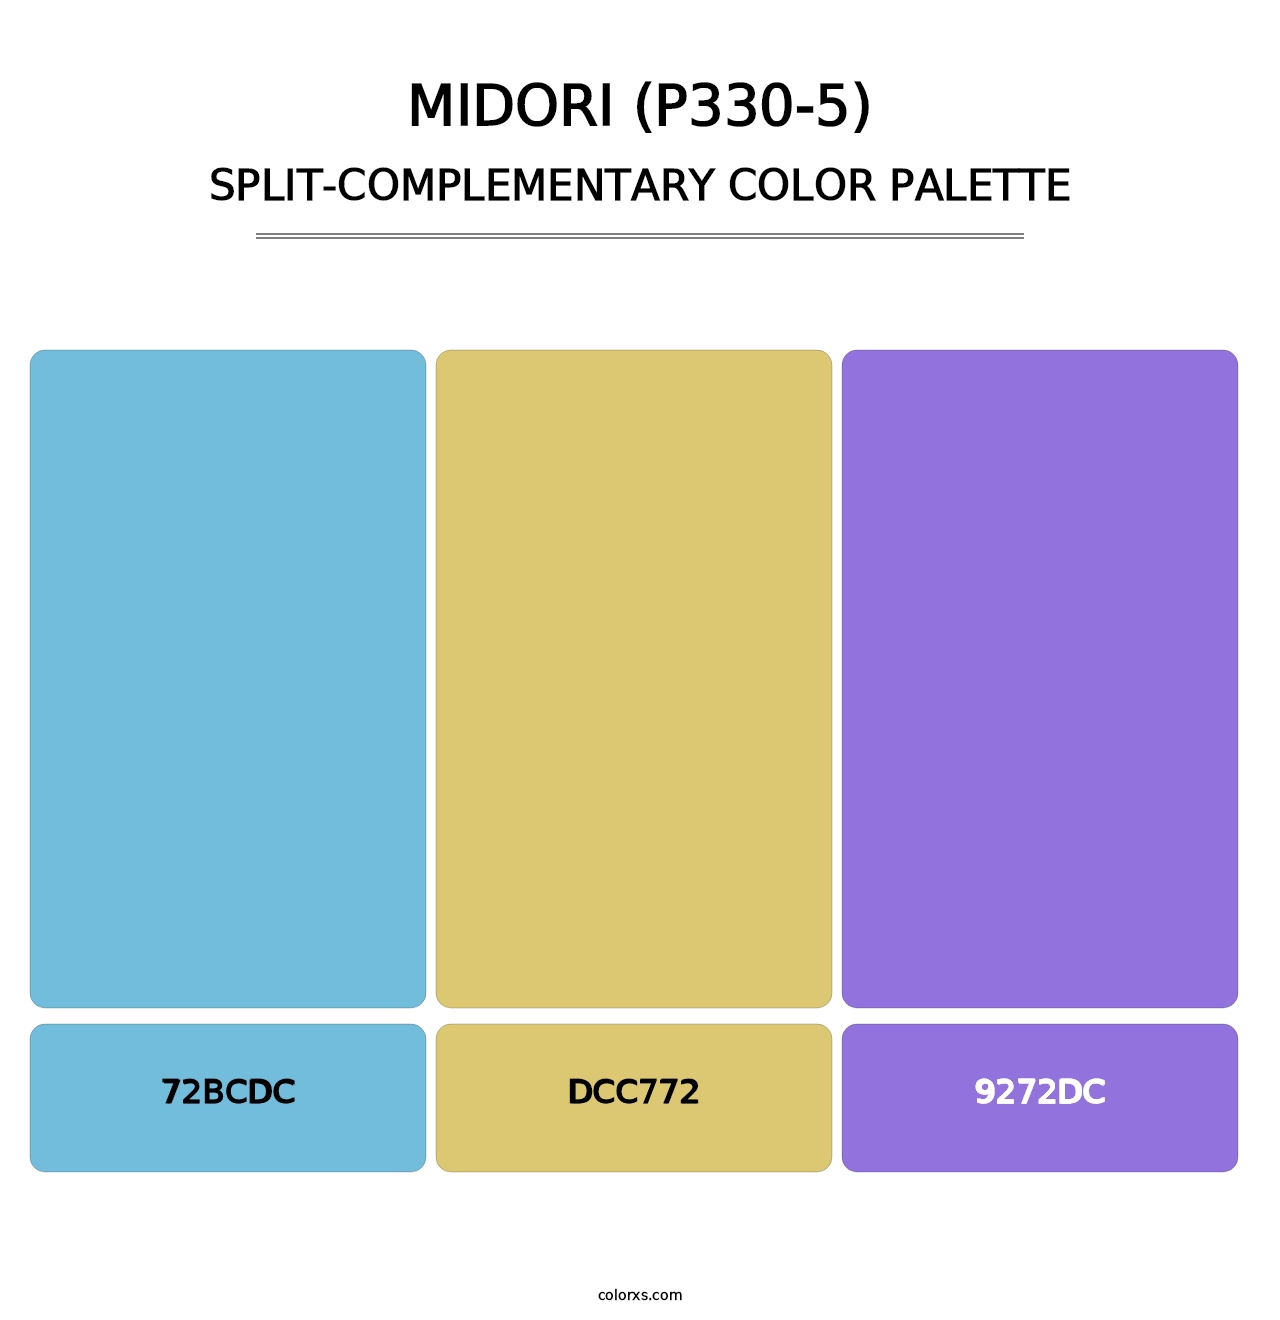 Midori (P330-5) - Split-Complementary Color Palette